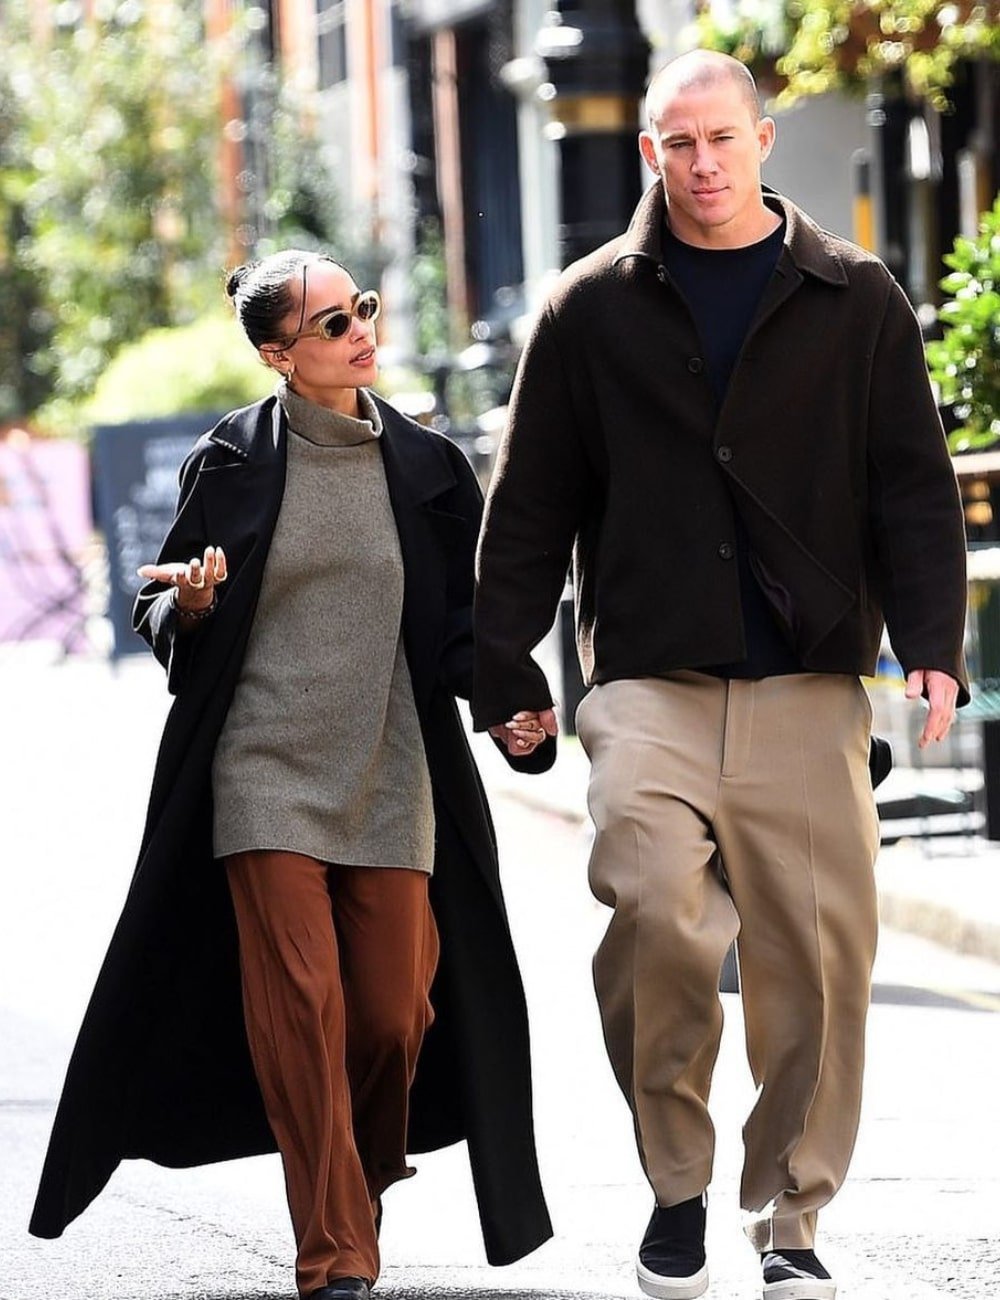 Zoë Kravitz e Channing Tatum - pantalona, blusa preta e overcoat preto - Quiet Luxury - Inverno  - andando na rua usando óculos de sol - https://stealthelook.com.br